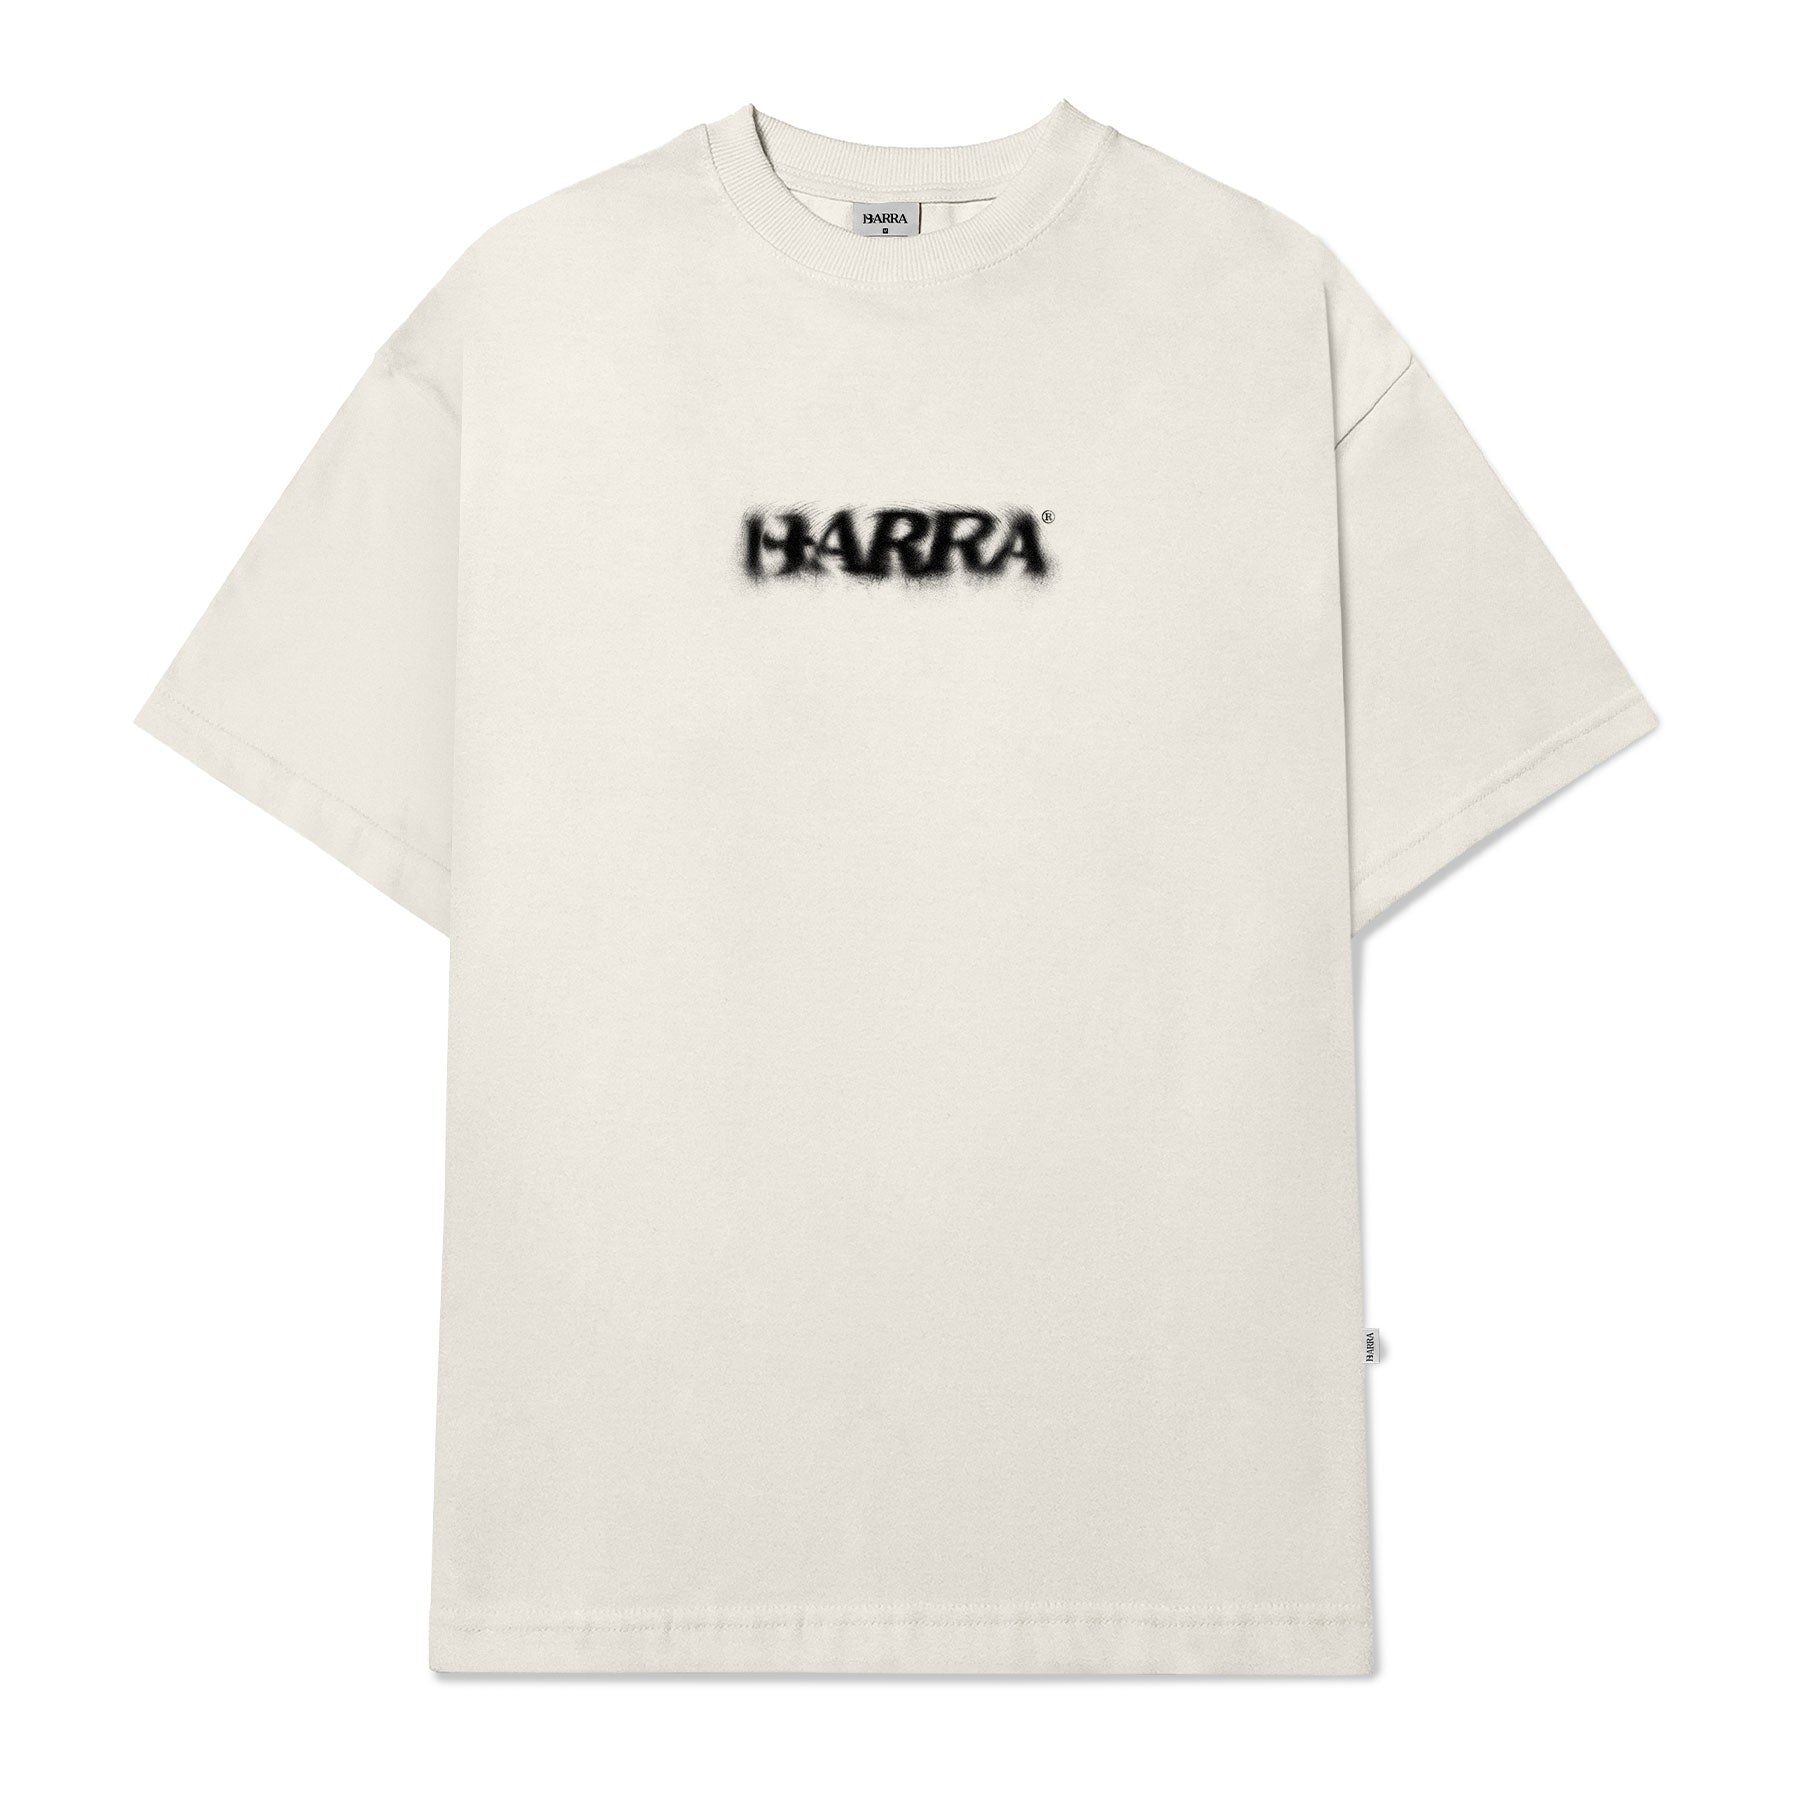 Barra Crew - Camiseta Remix Off White